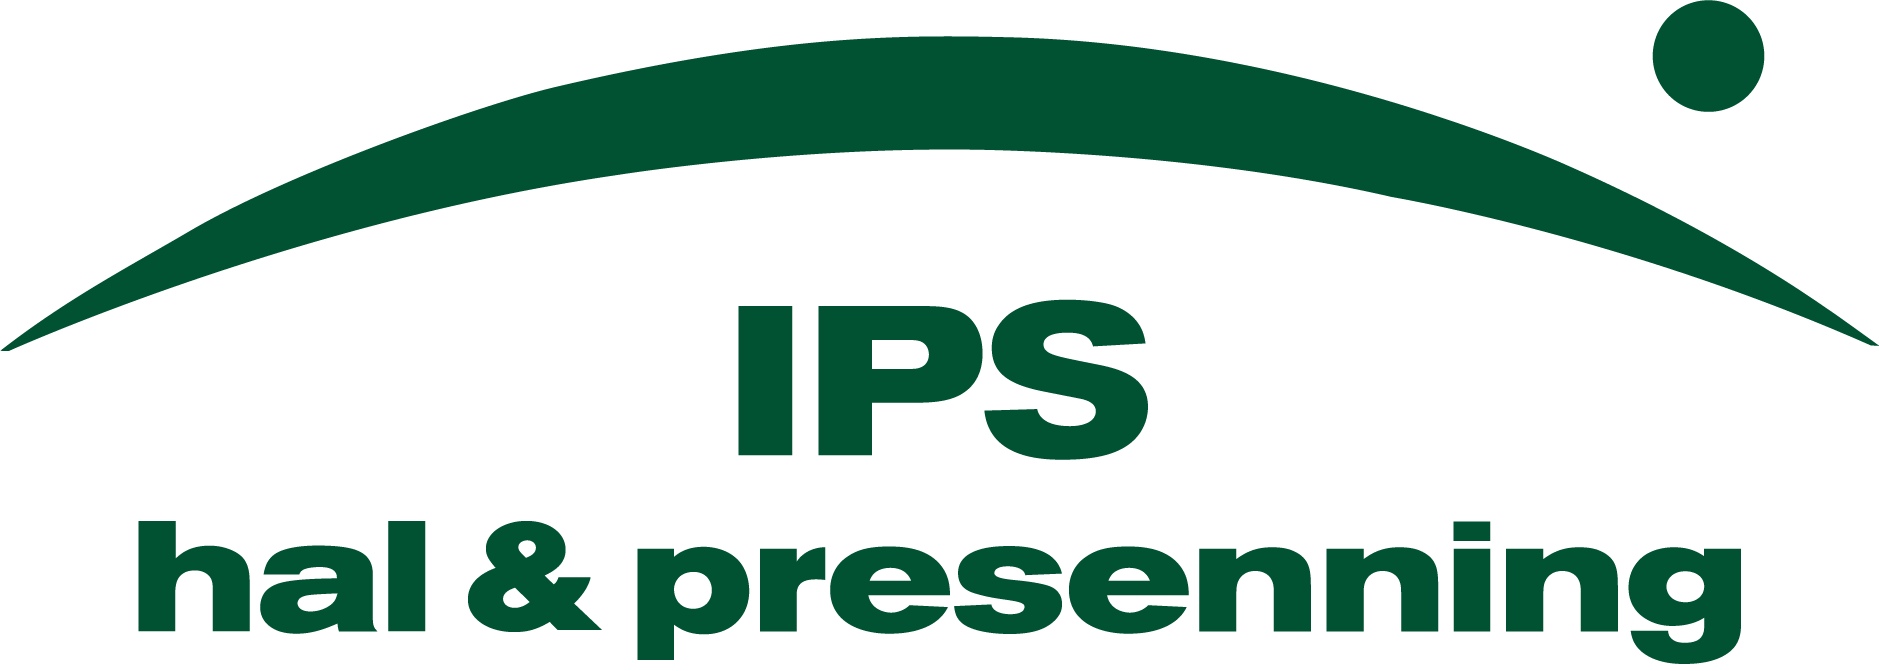 IPS_hal_o_presenning_CMYK_Green